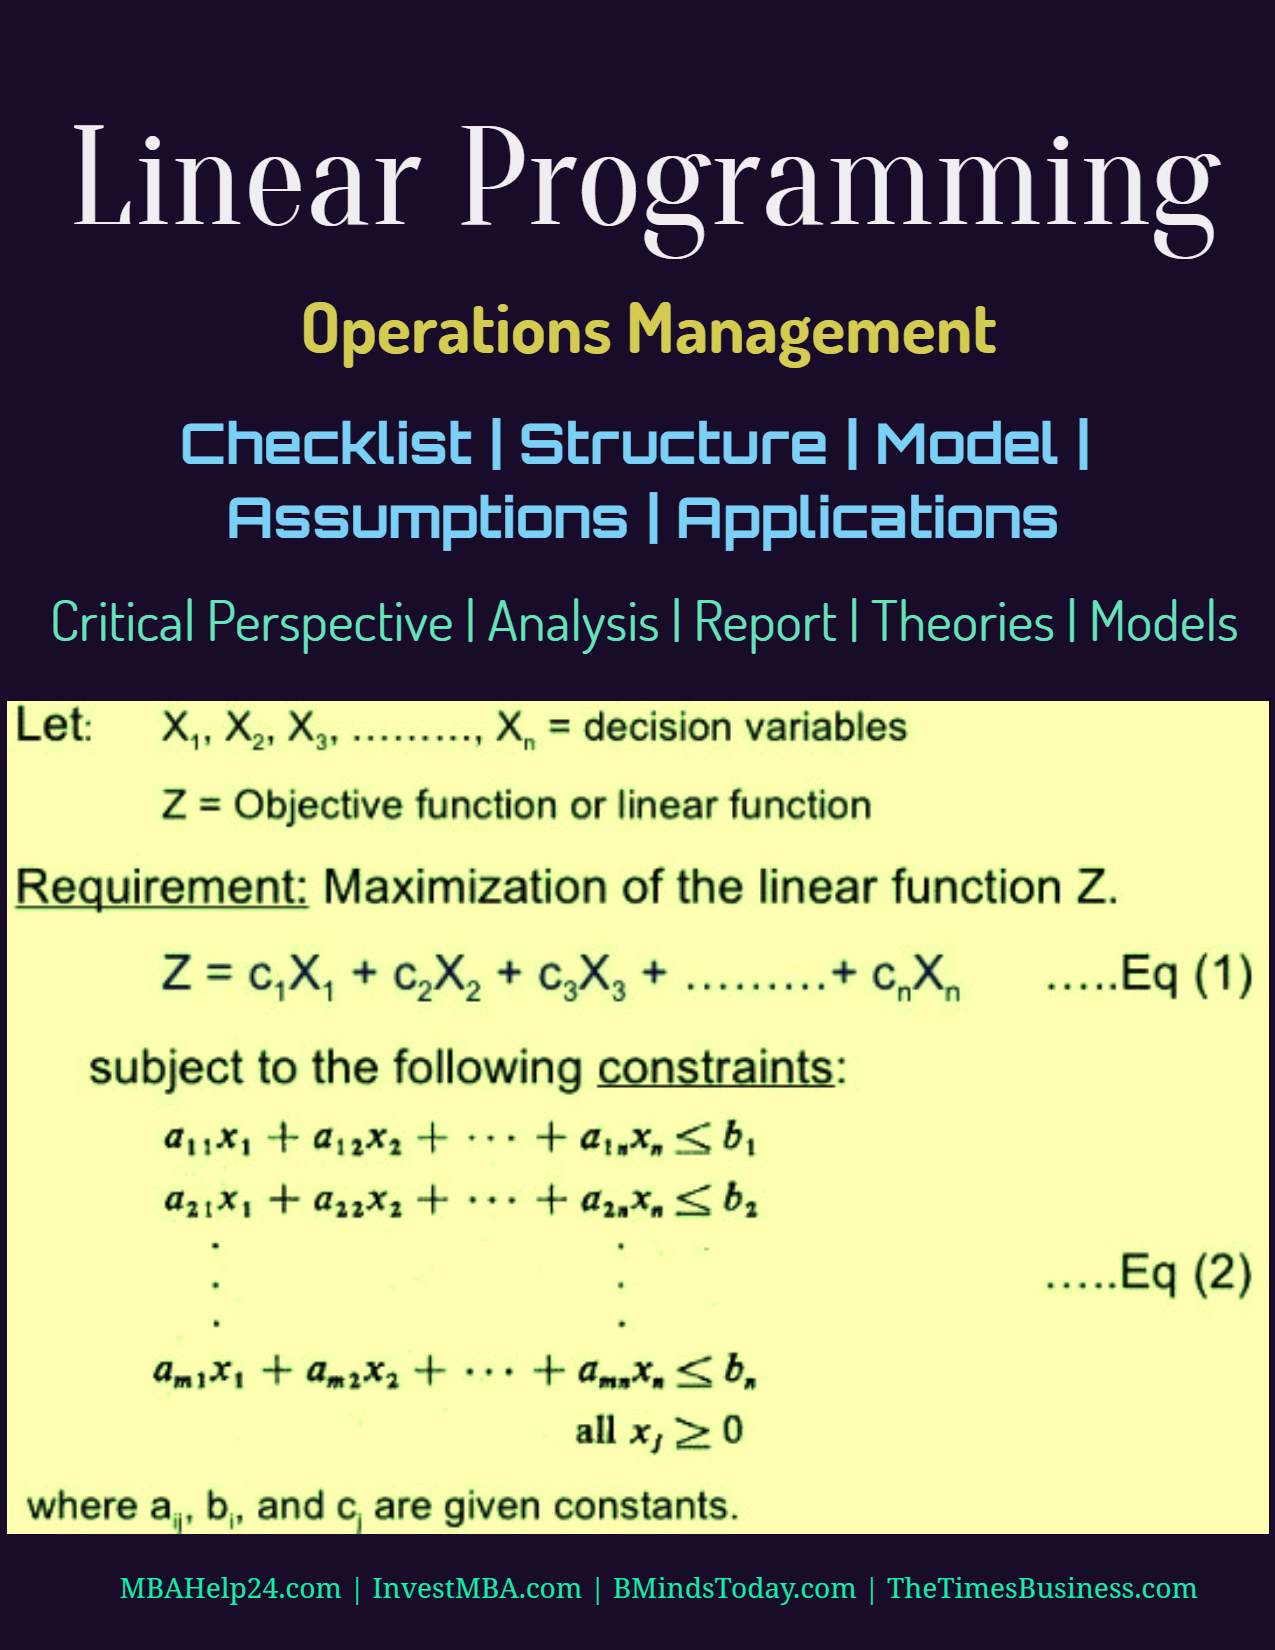 Linear Programming | Checklist | Structure | Model | Assumptions | Applications Linear Programming Linear Programming | Checklist | Structure | Model | Assumptions | Applications Linear Programming Checklist Structure Model Assumptions Applications